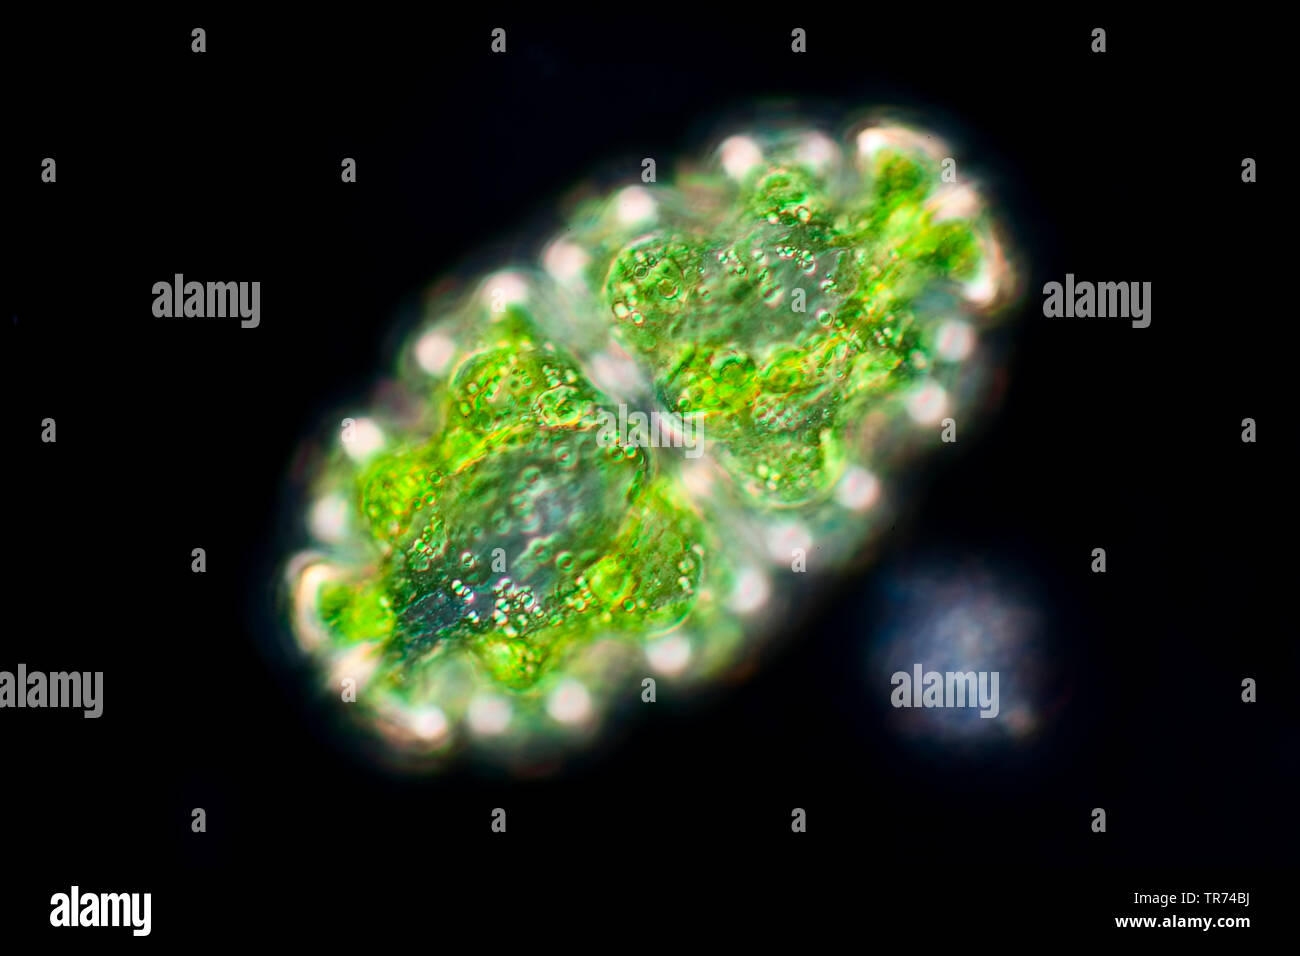 Euastrum (Euastrum spec.), green alga, in darkfield, x 100, Germany Stock Photo